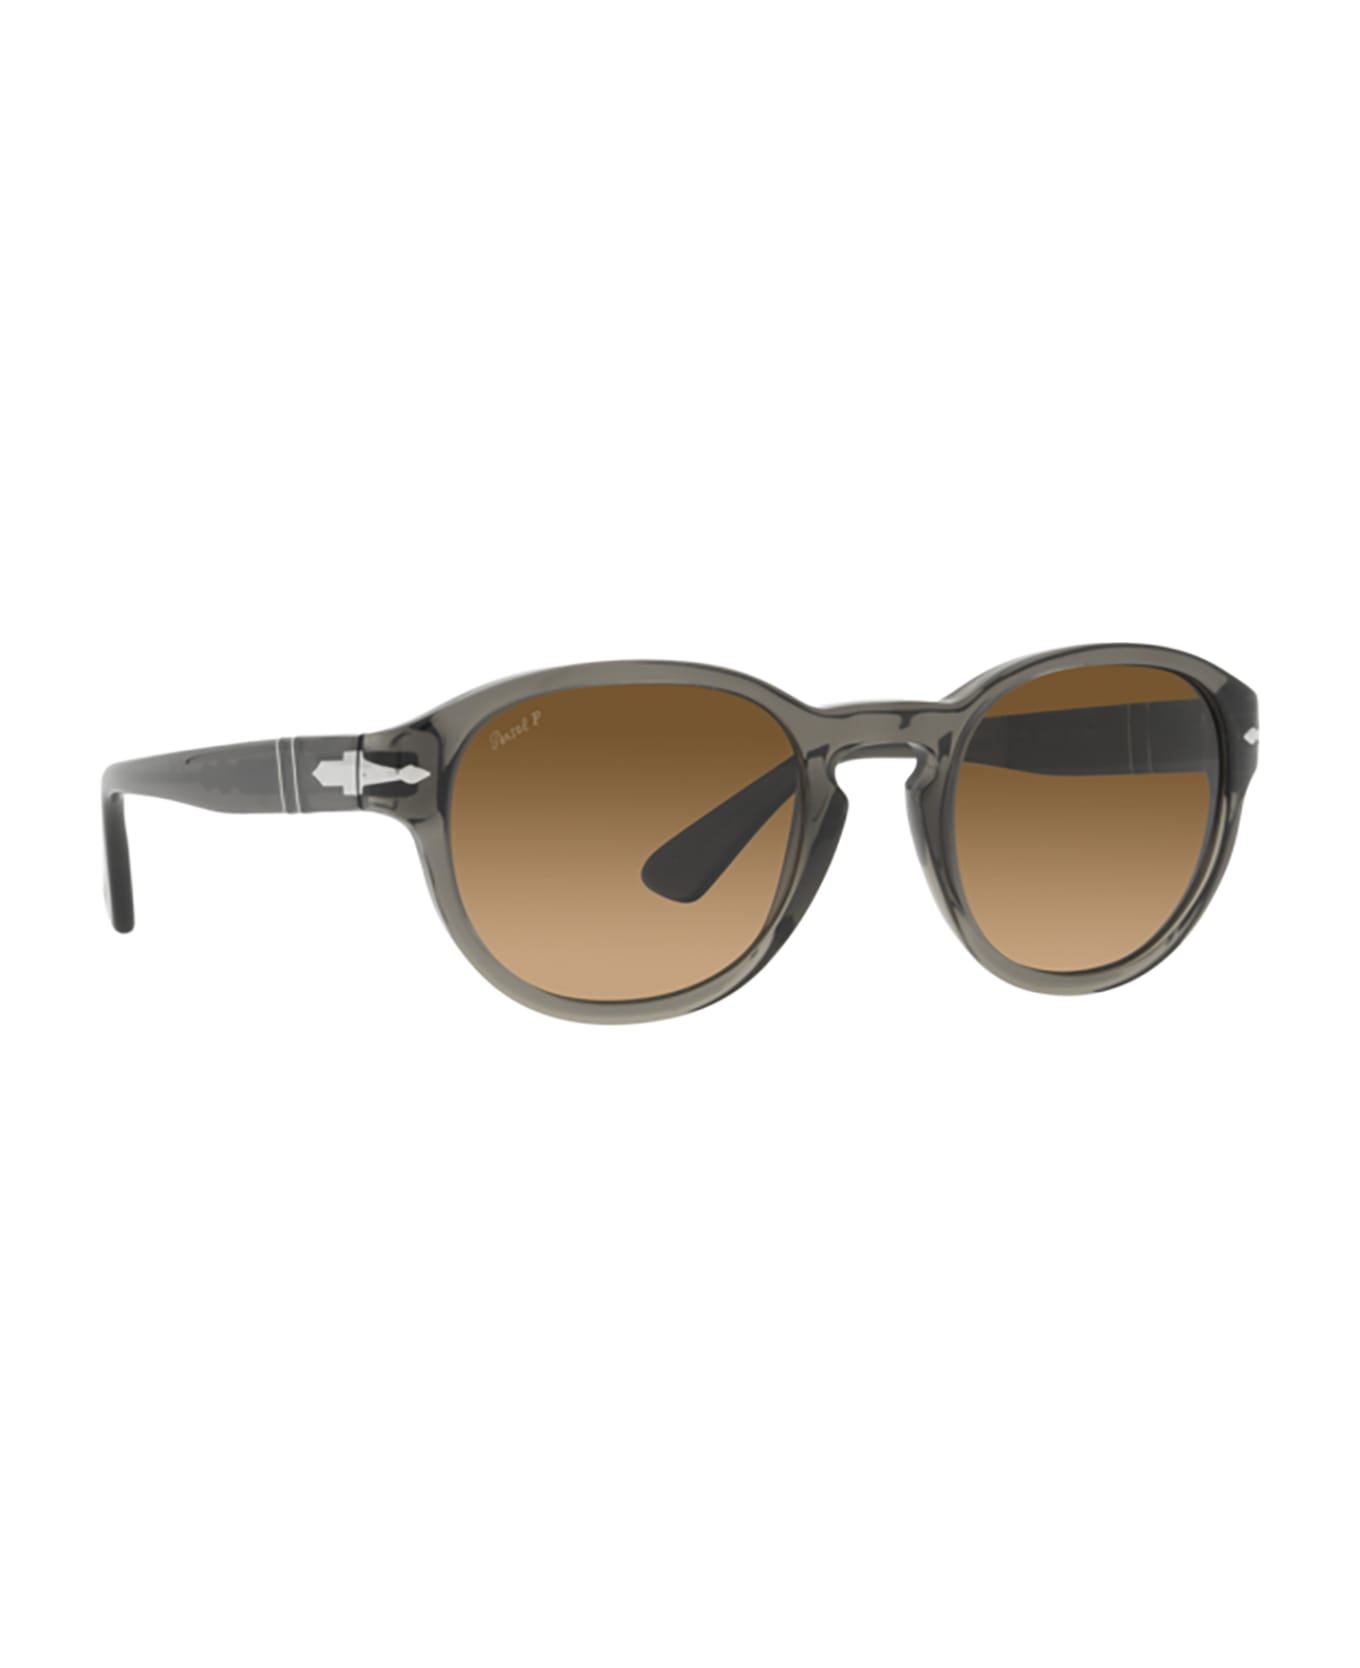 Persol Po3304s Grey Taupe Transparent Sunglasses - Grey taupe transparent